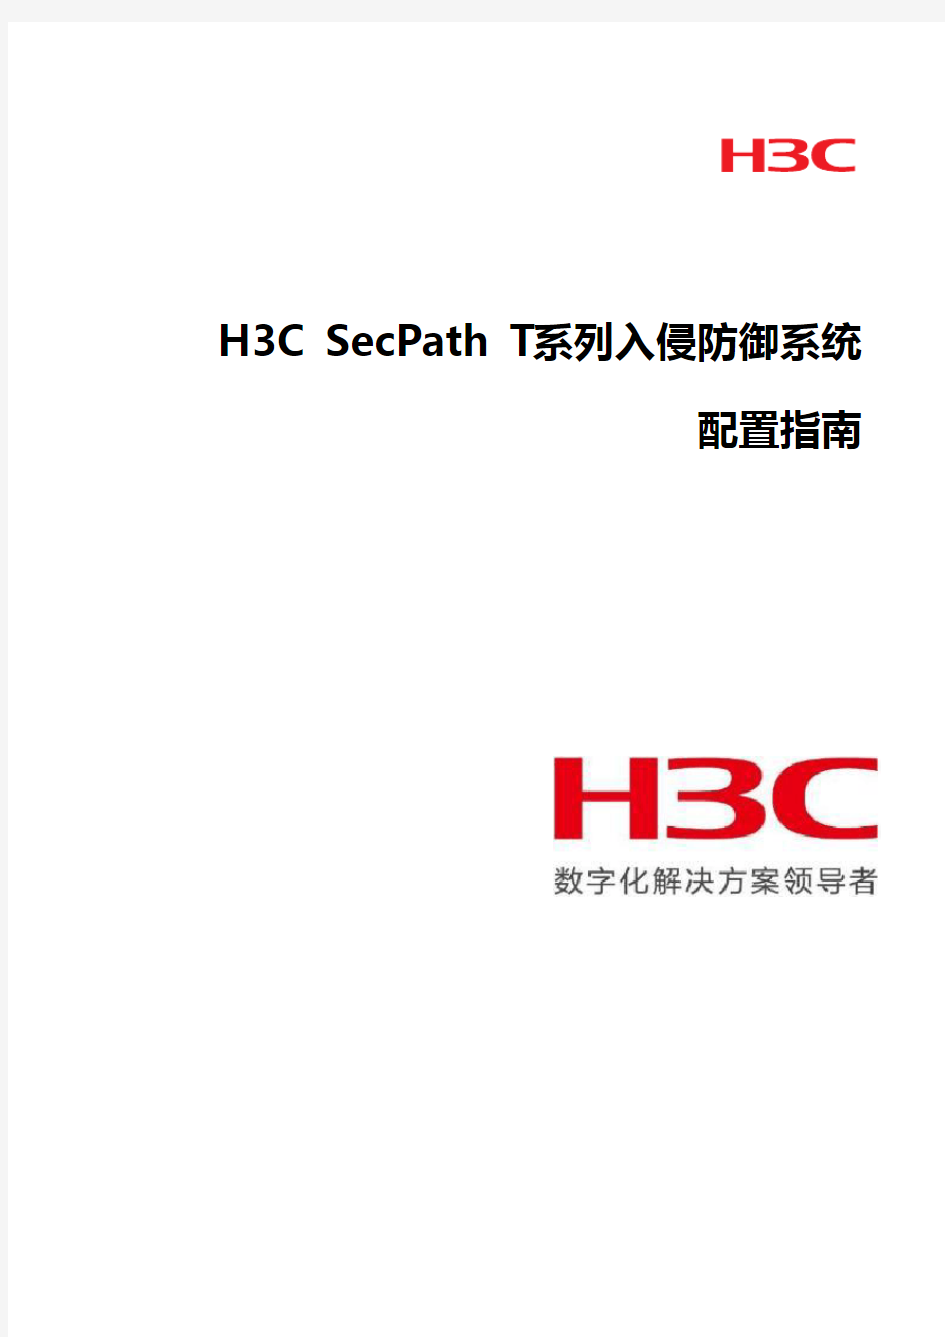 H3C SecPath T系列入侵防御系统配置指南